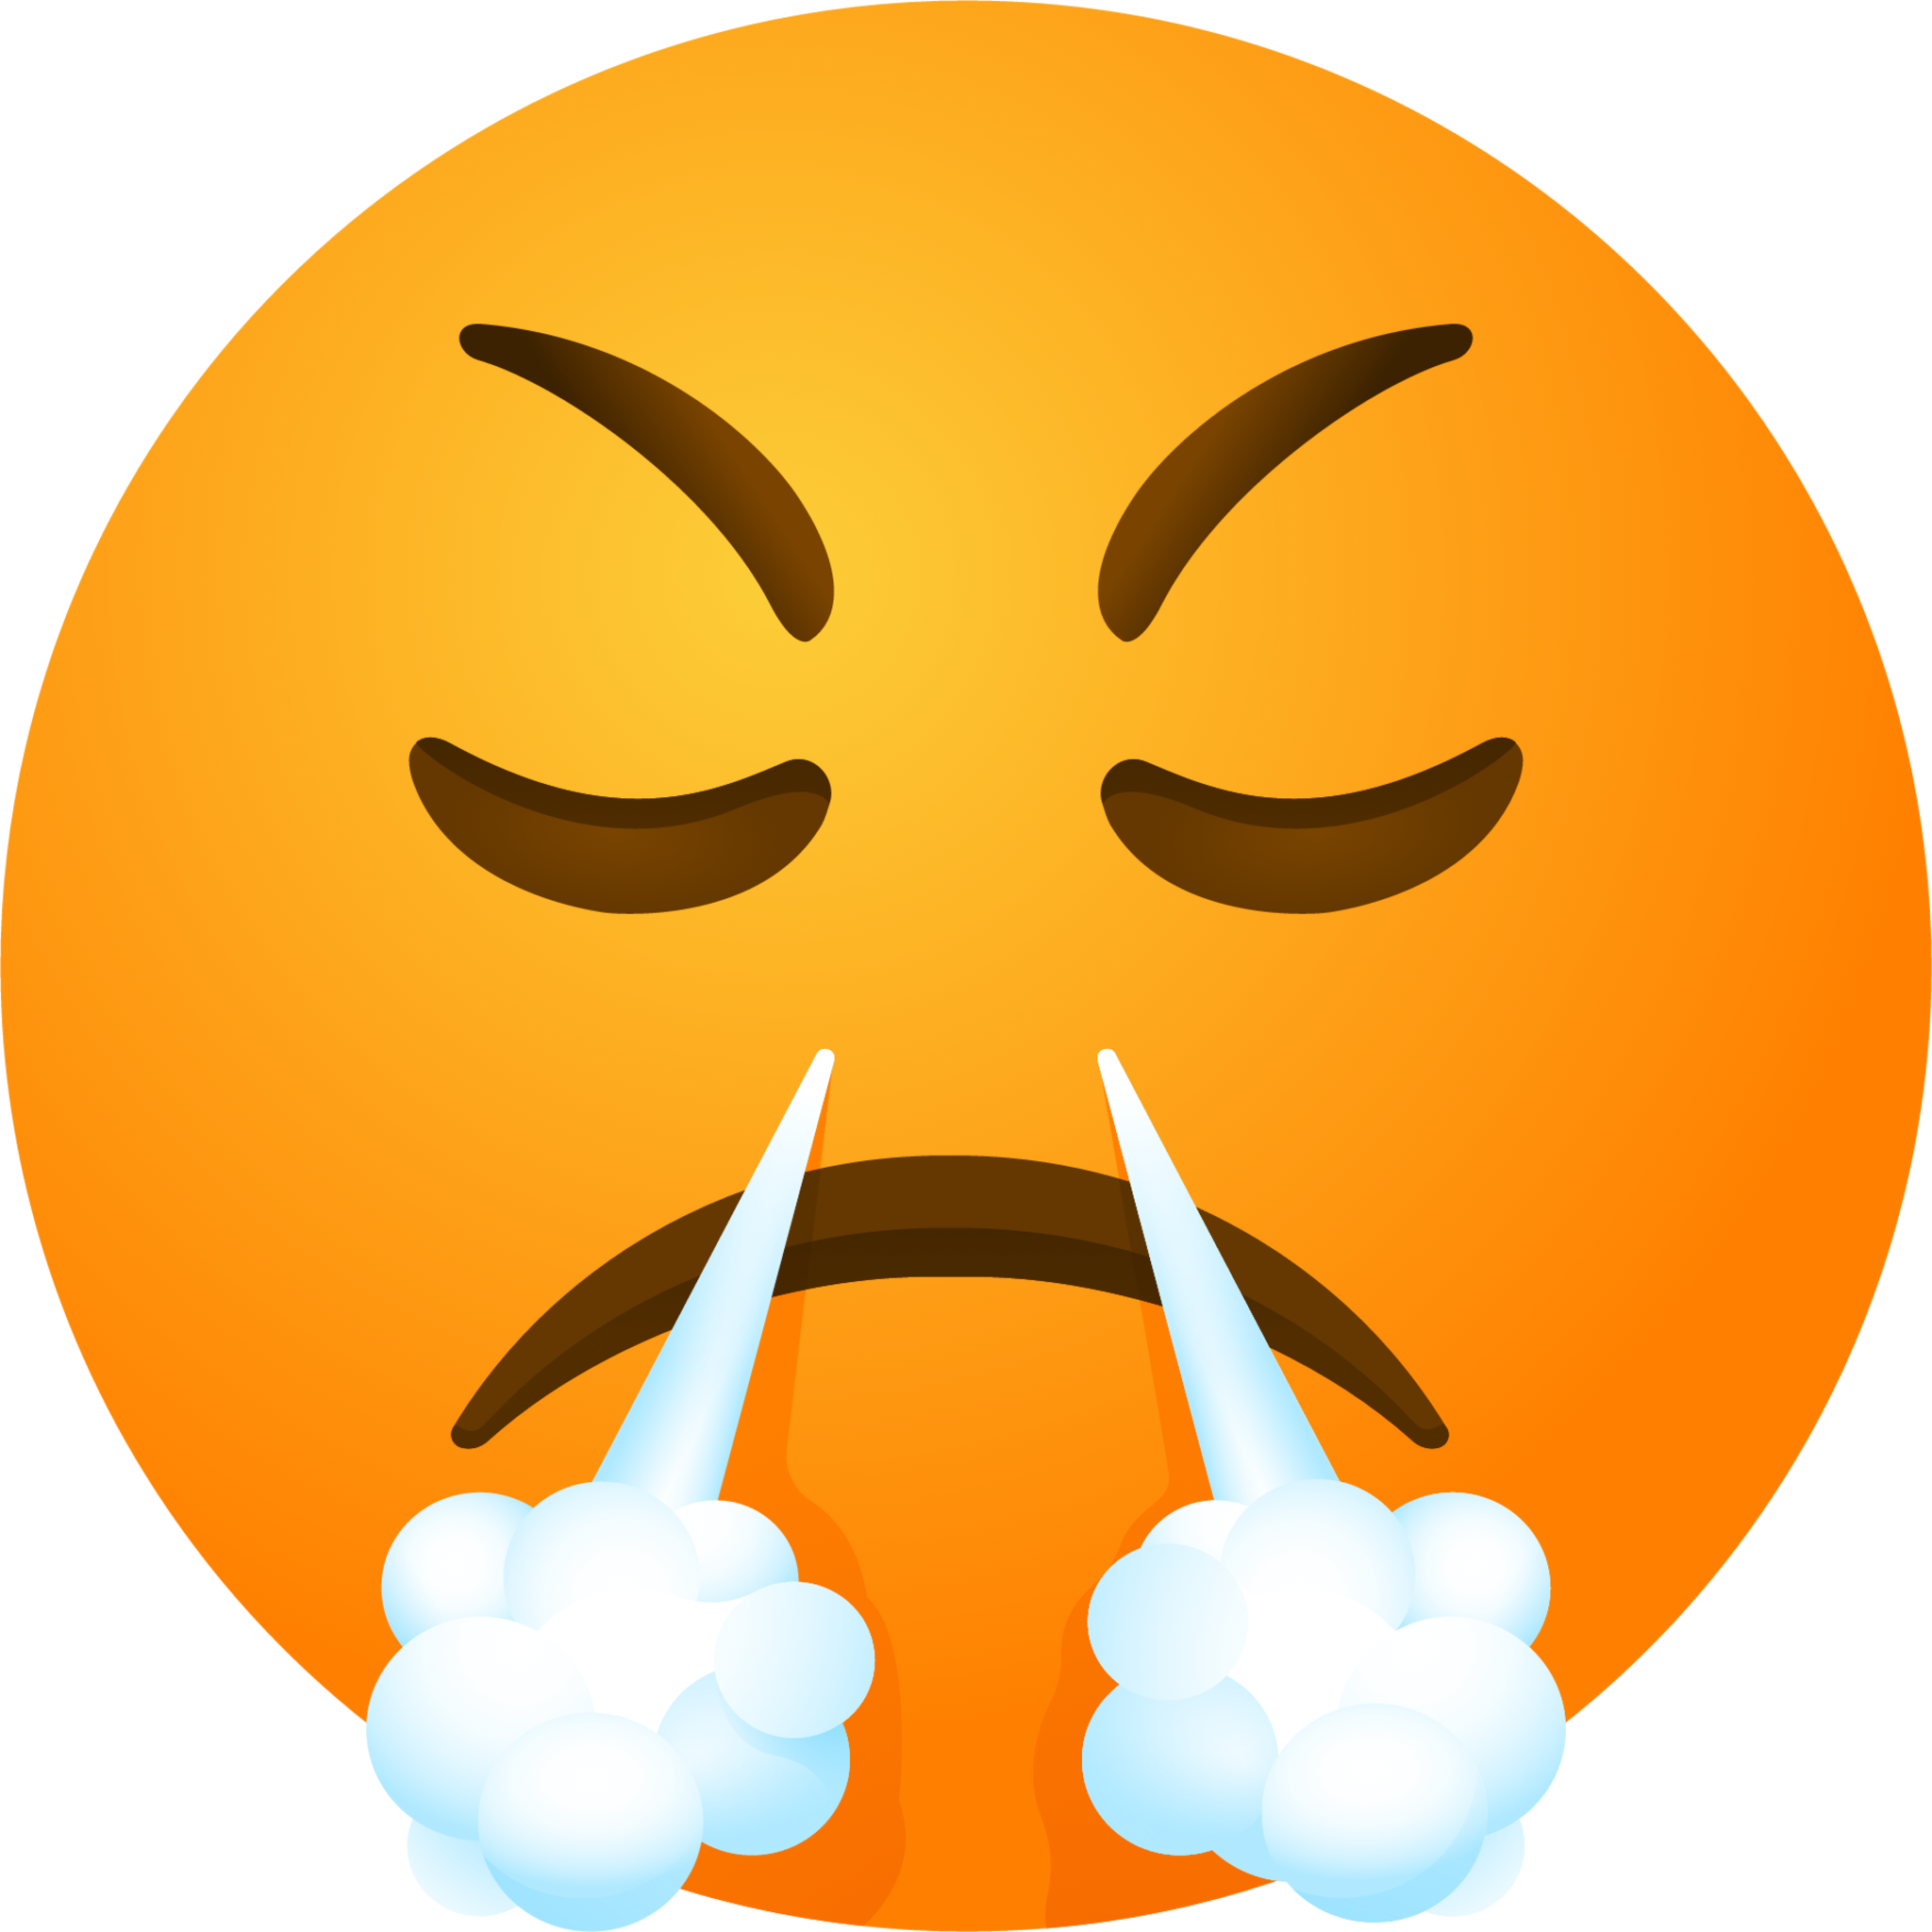 Face with steam from nose emoji emoji